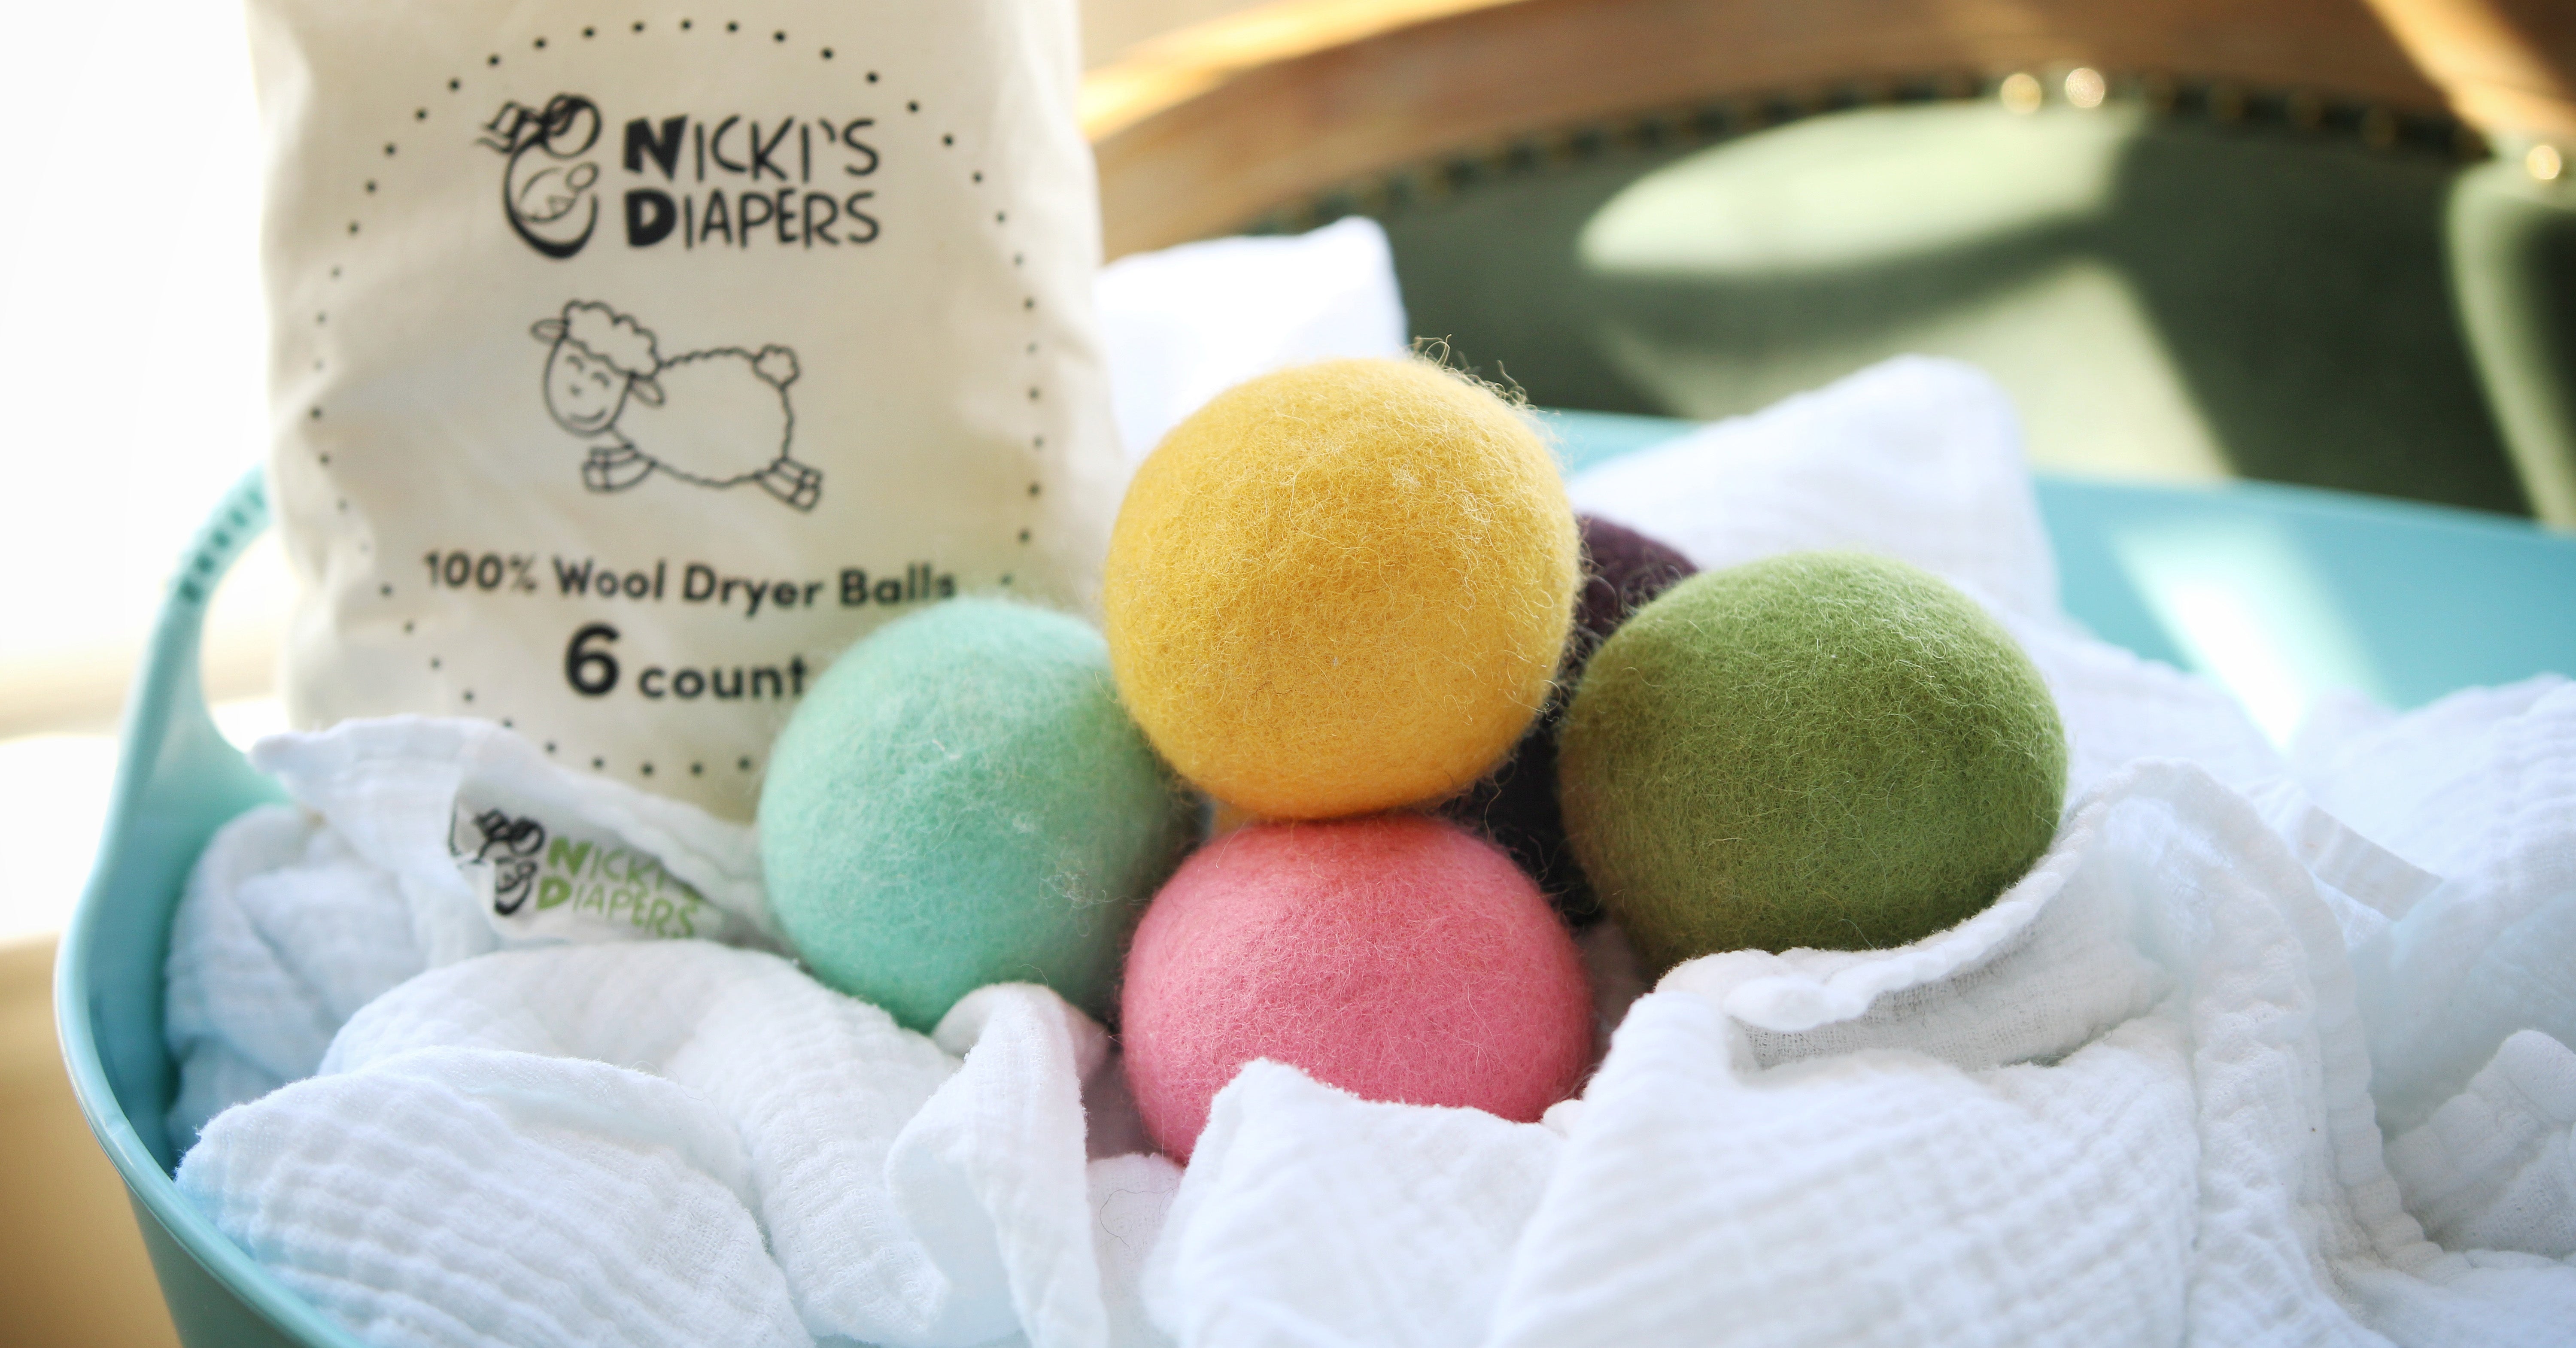 Nicki's Diapers Wool Dryer Ball 6 Pack